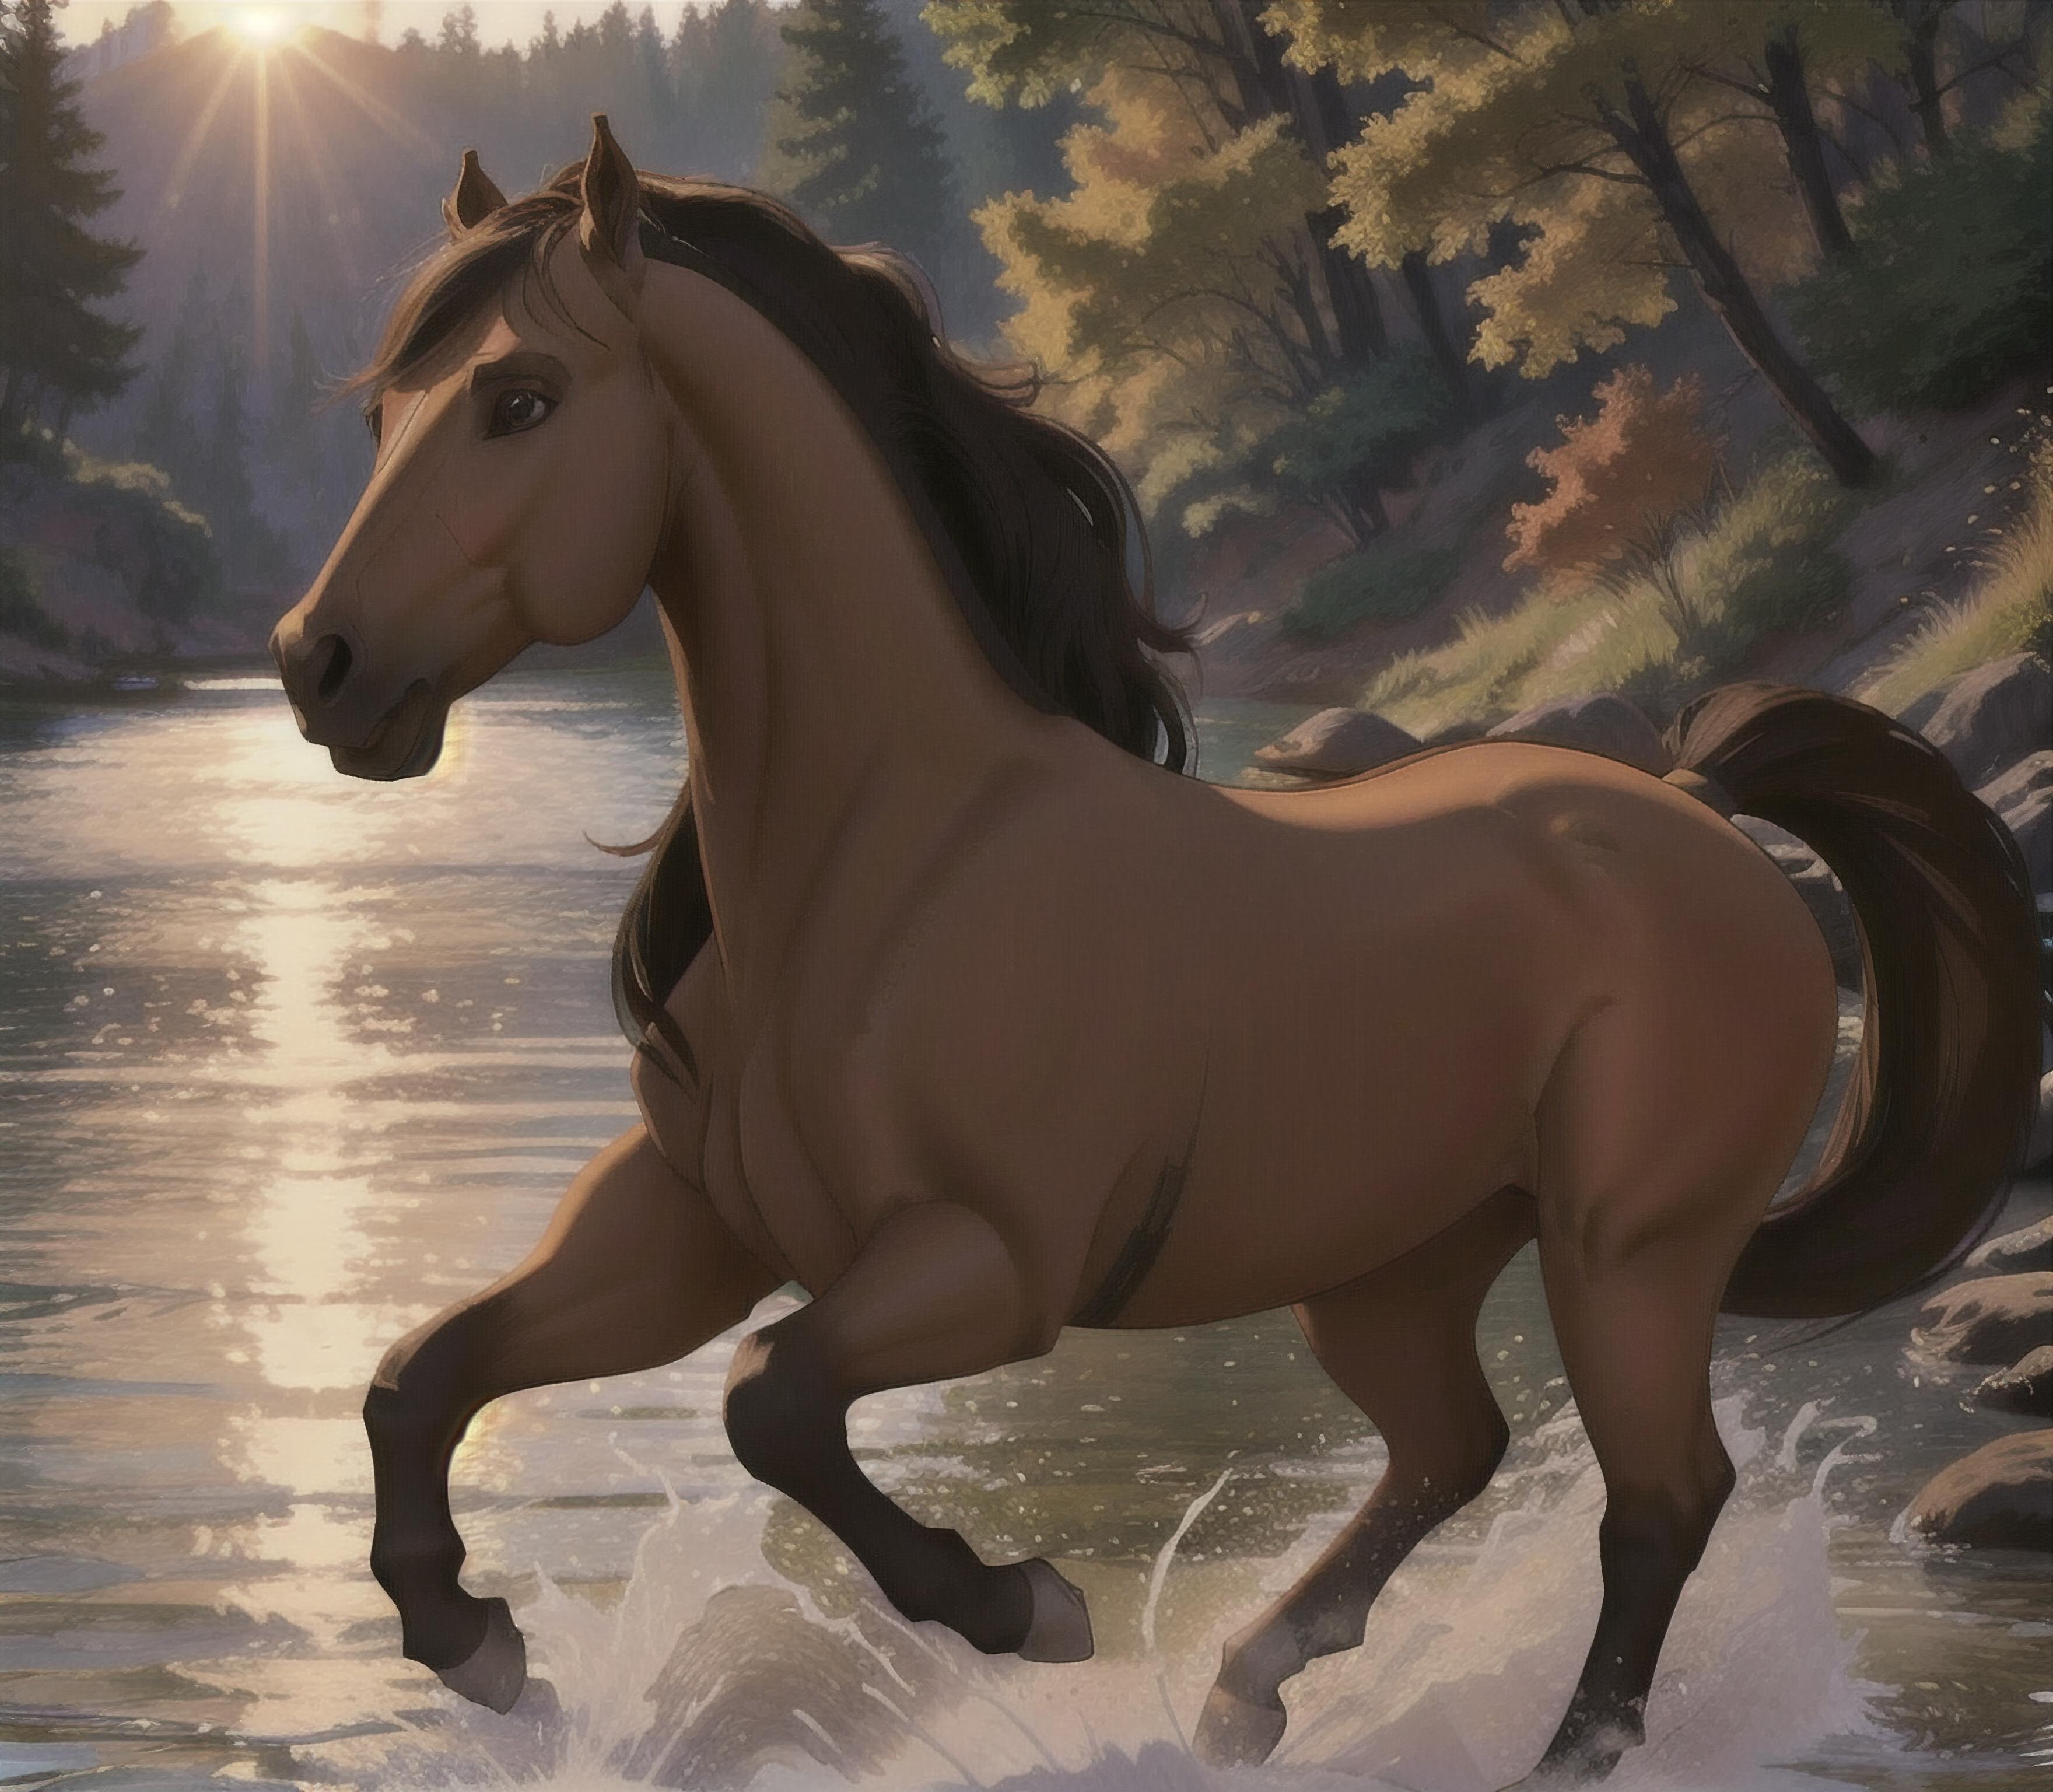 Spirit Stallion of the Cimarron image by AlianisL